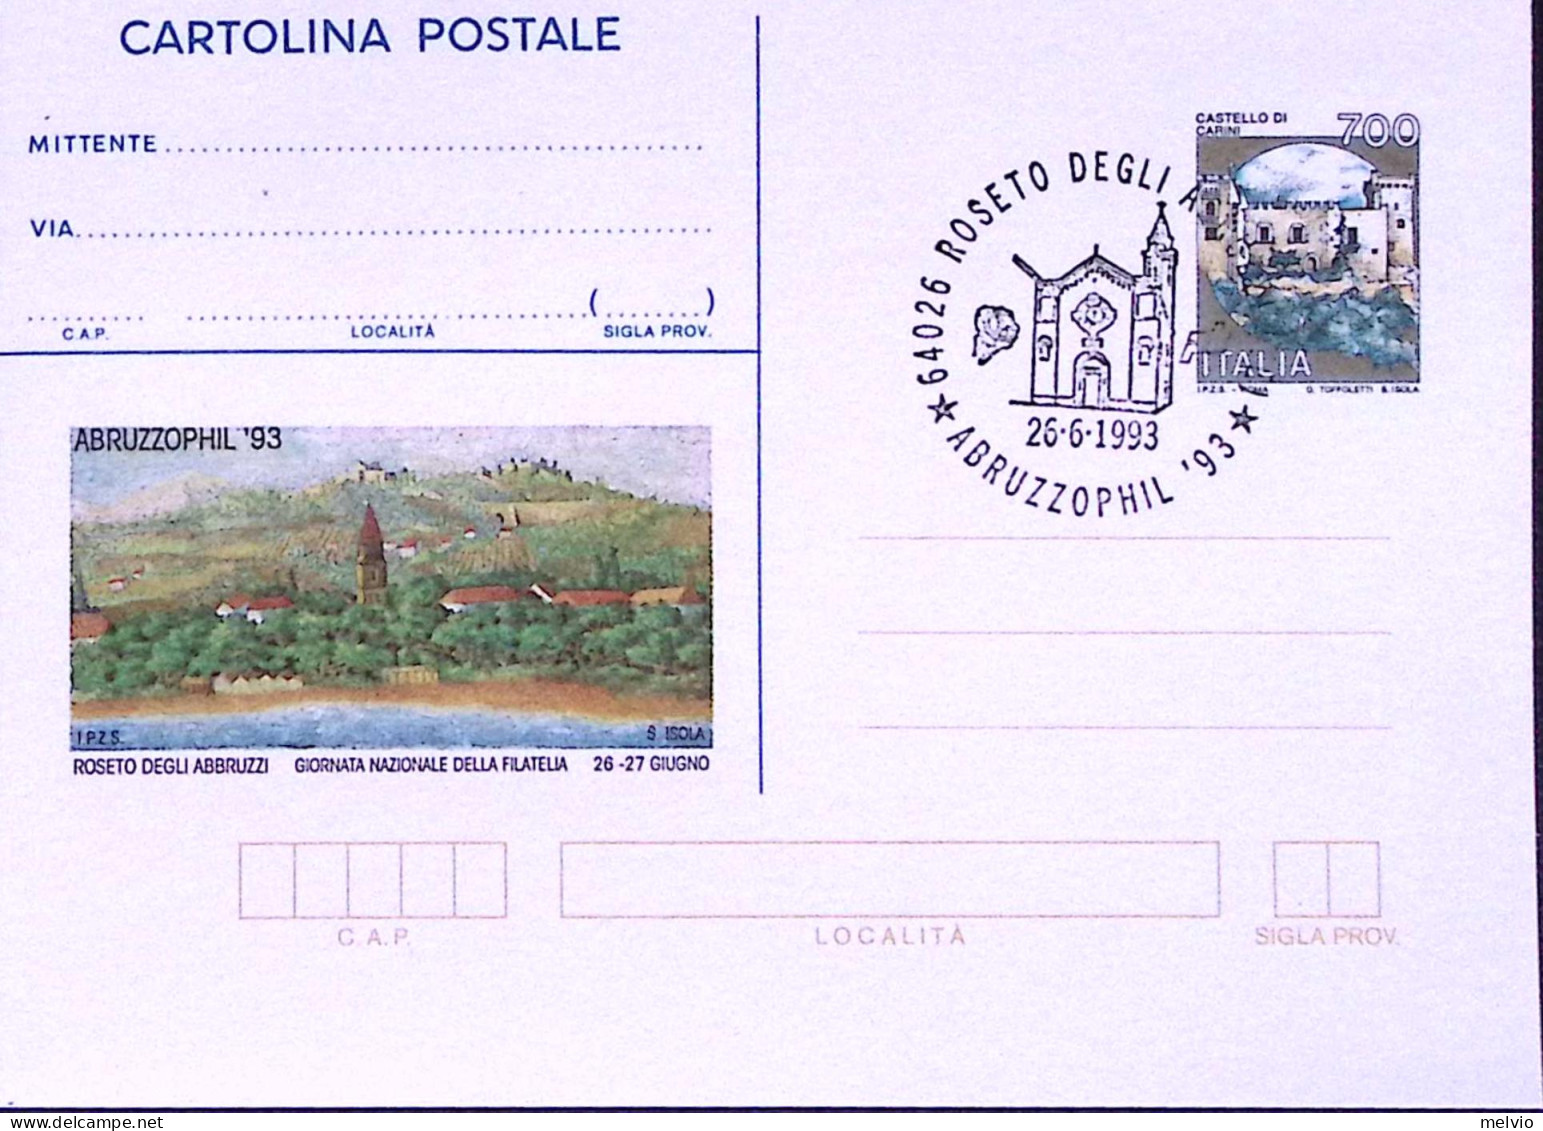 1993-ABRUZZOPHIL Cartolina Postale Castelli Lire 700, Annullo Speciale - Stamped Stationery